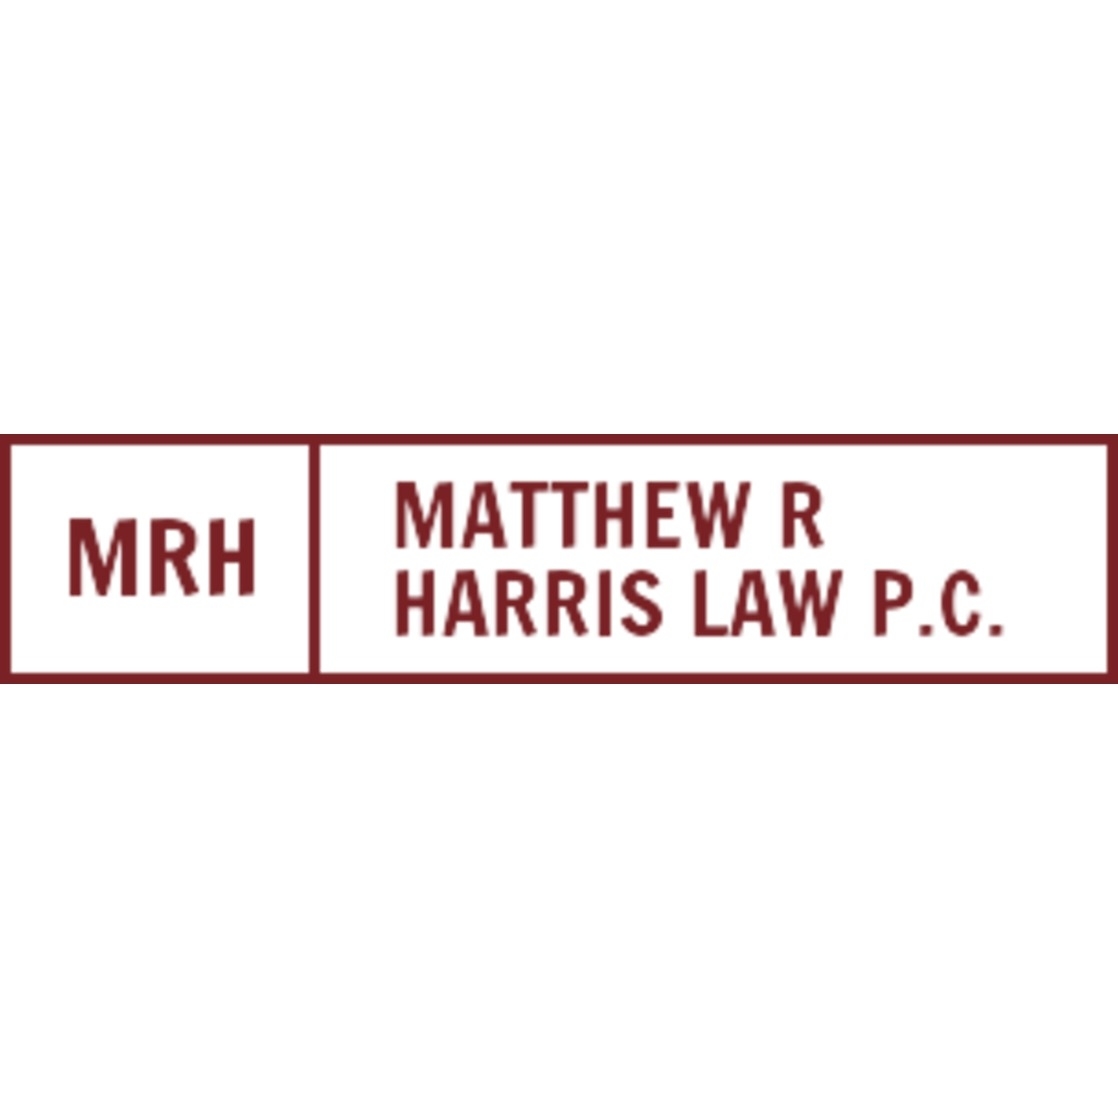 Matthew R Harris Lawyer P.C. - Conseillers en administration